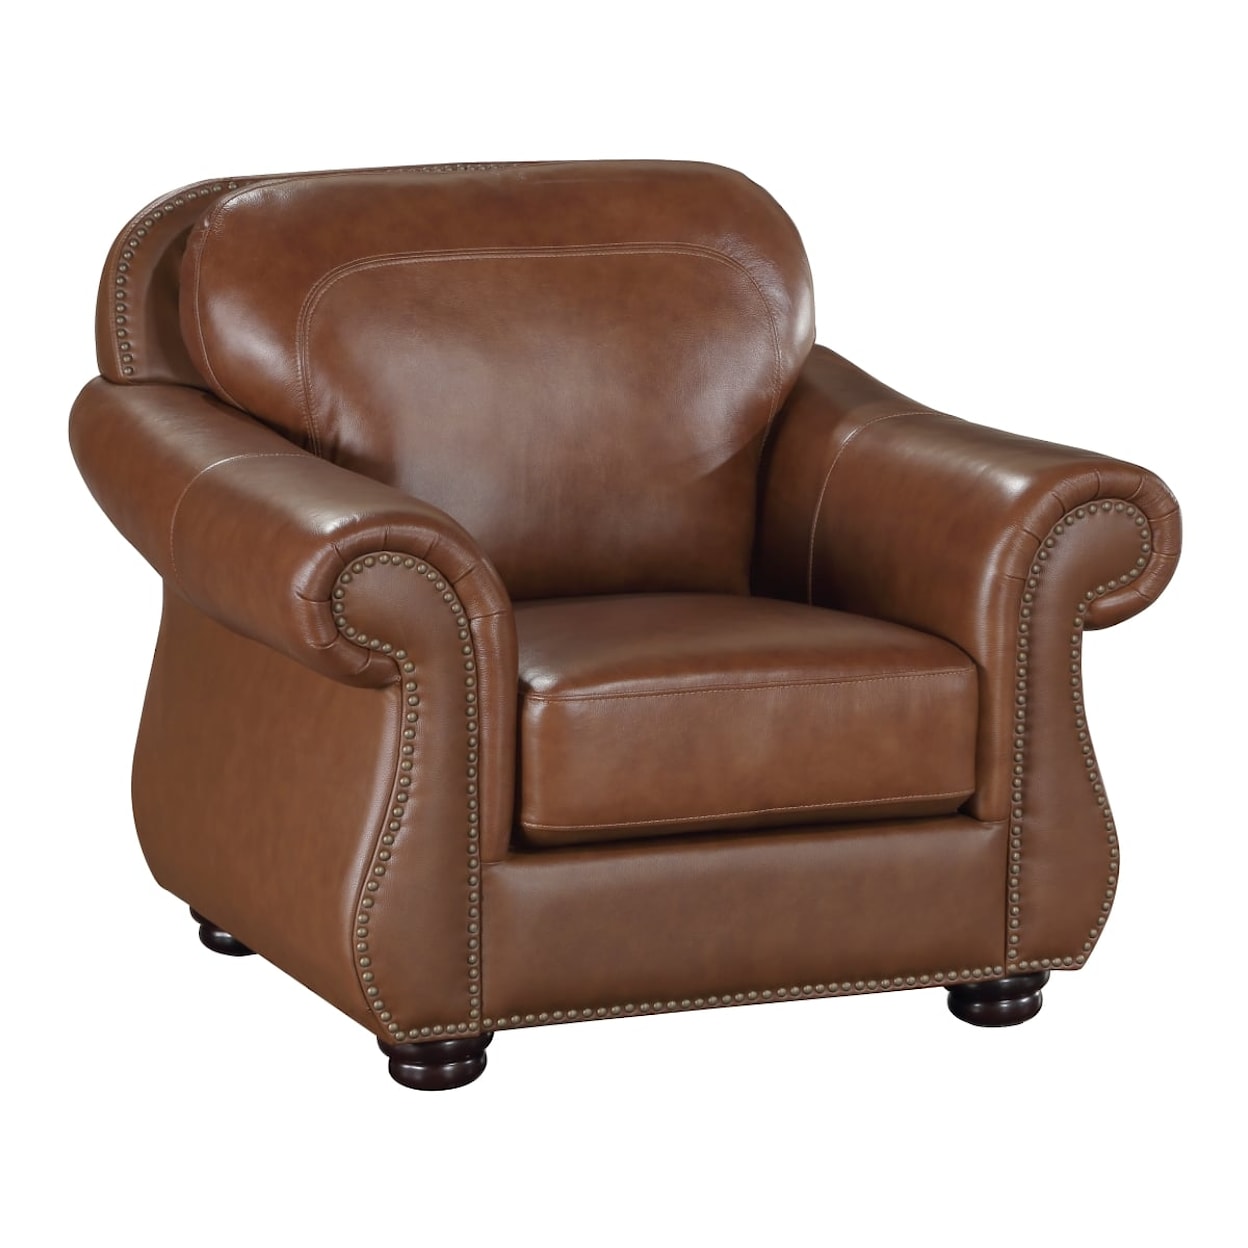 Homelegance Furniture Attleboro Accent Chair